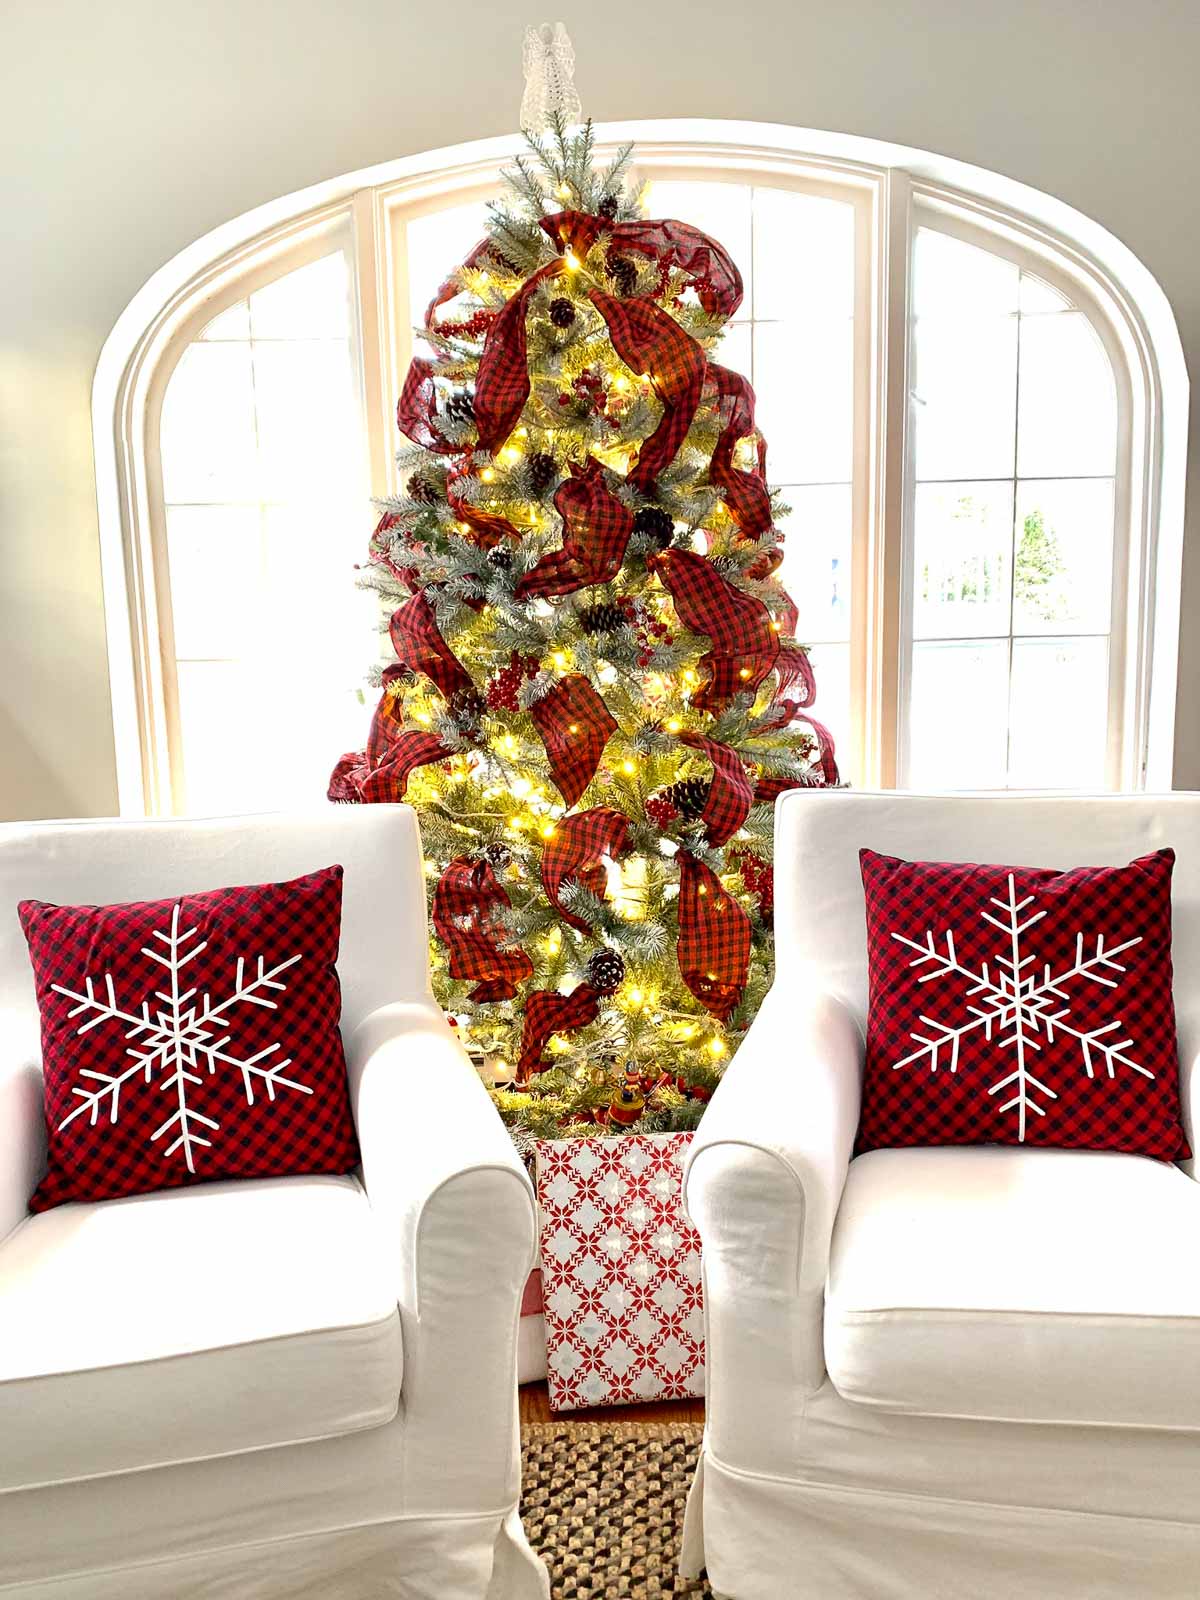 How To Decorate A Christmas Tree On A Budget - Home with Keki